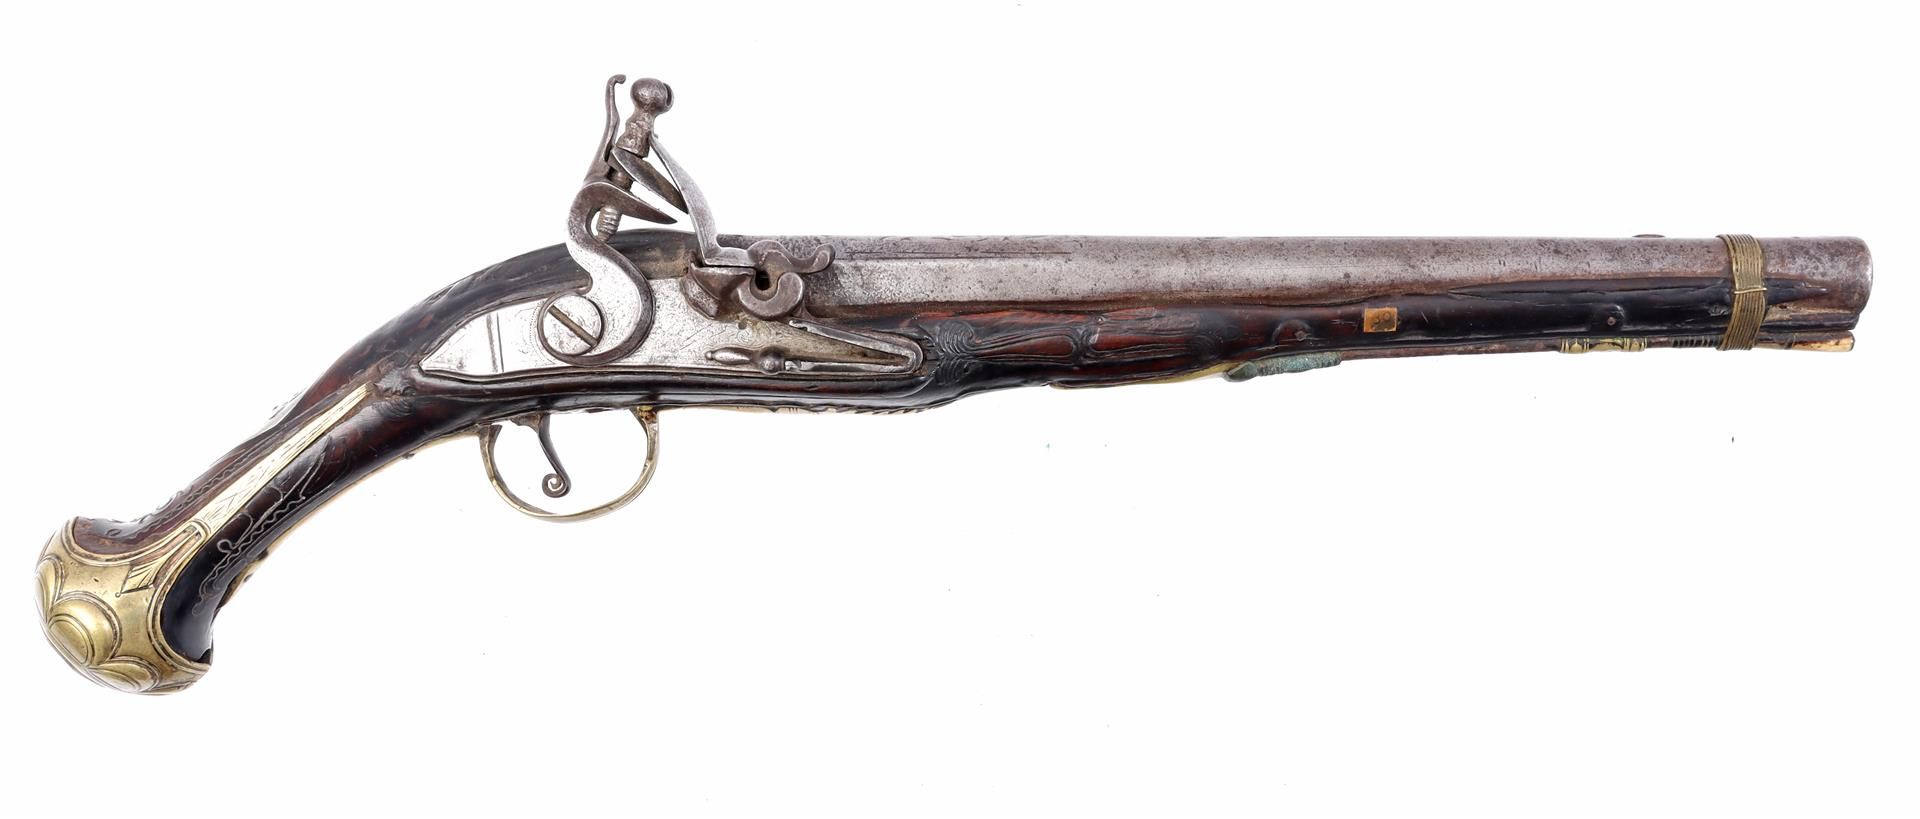 Walnut, brass and metal flint pistol